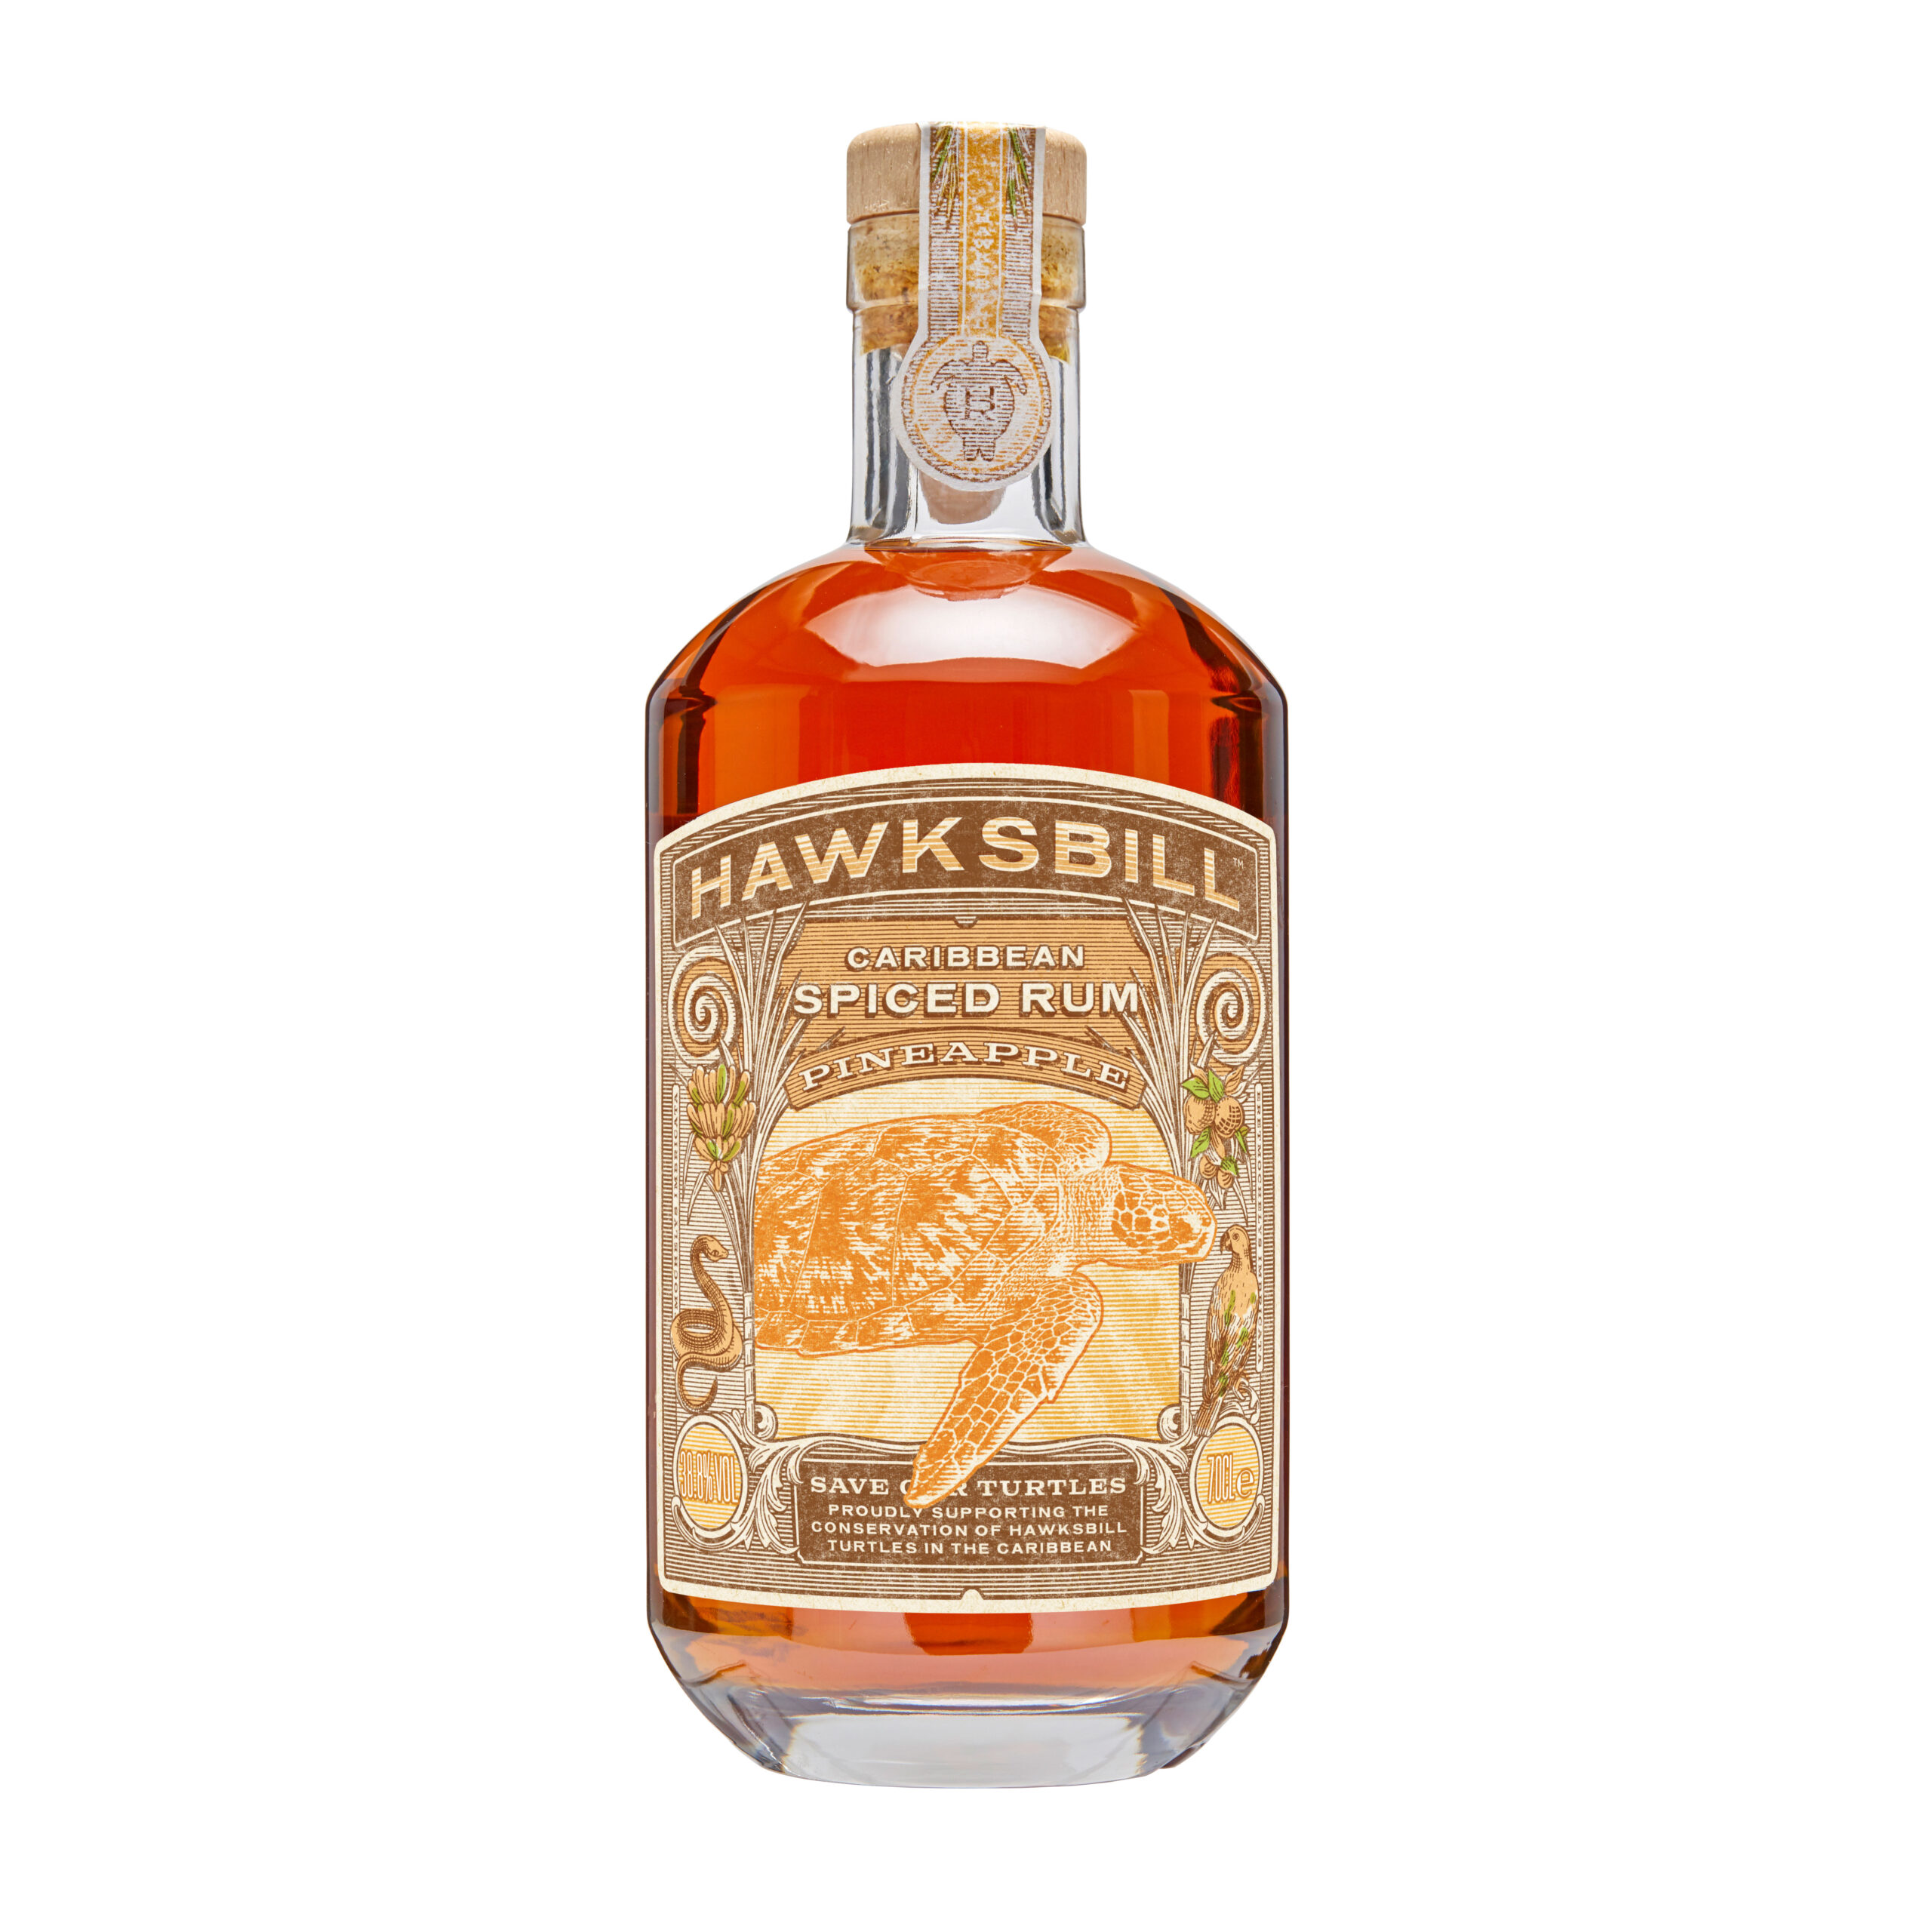 Hawksbill Caribbean Spiced Rum Pineapple